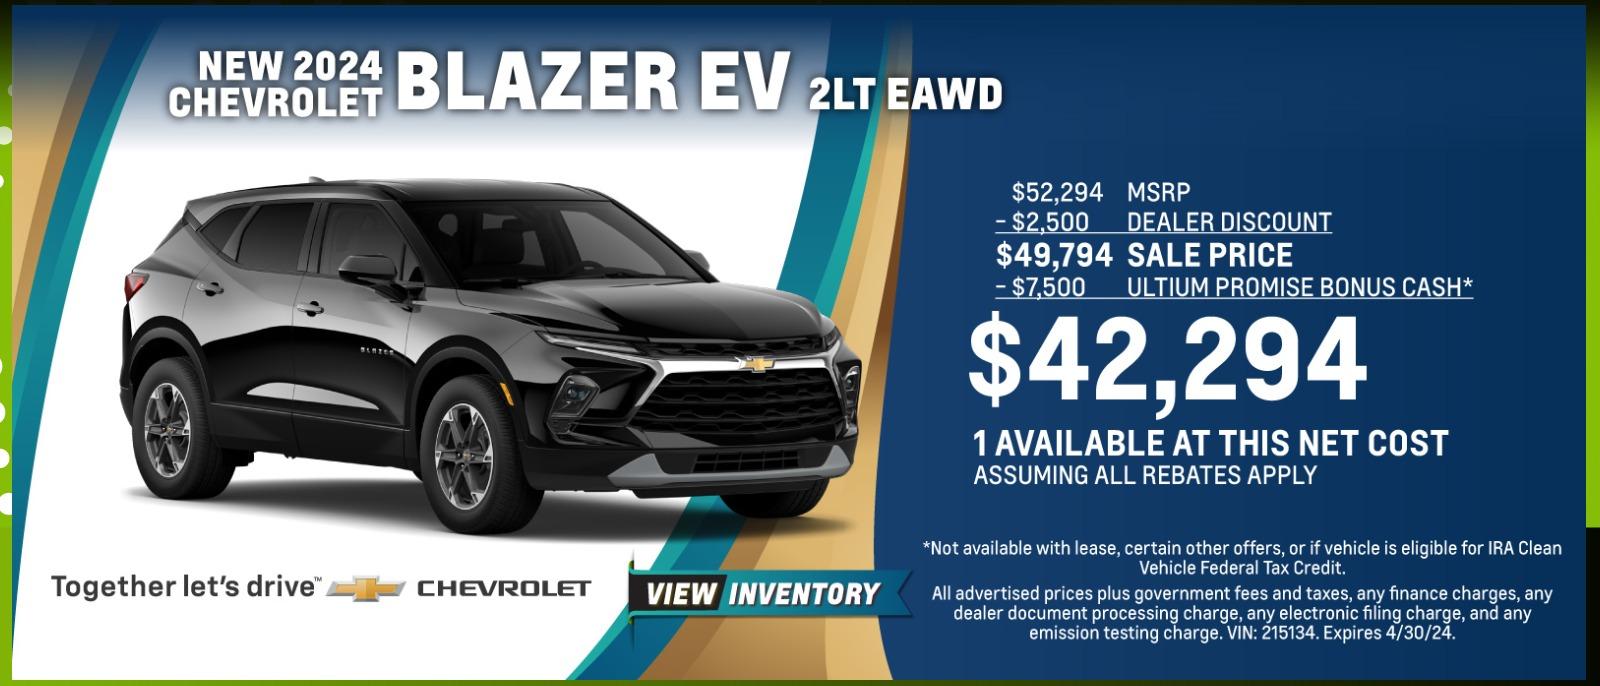 Get a New 2024 Blazer EV